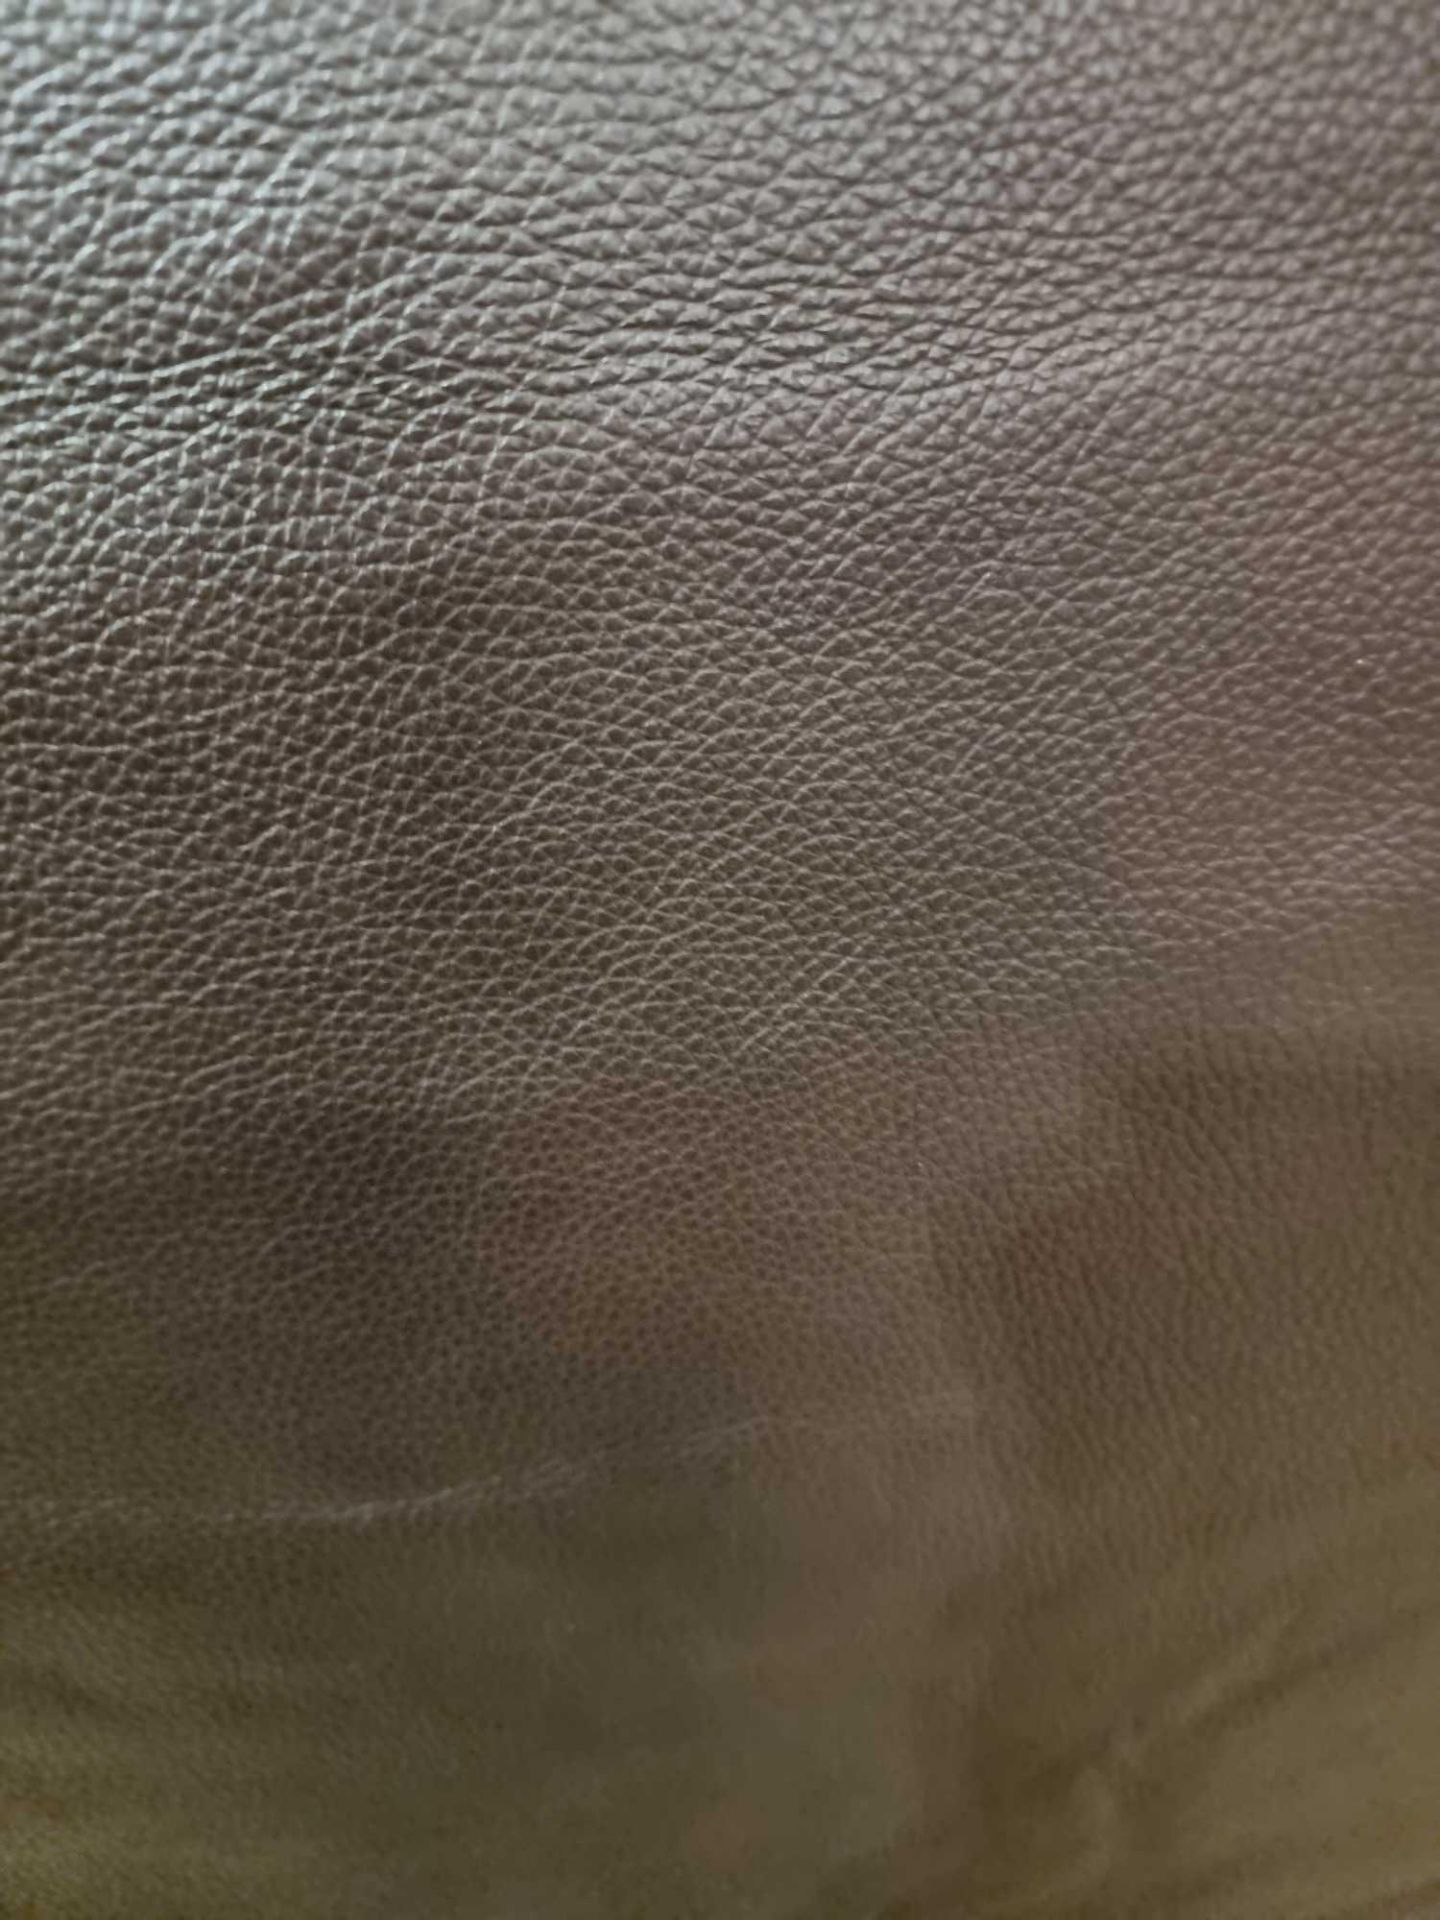 Mastrotto Dakota Chocolate Leather Hide approximately 3.78mÂ² 2.1 x 1.8cm - Image 2 of 2